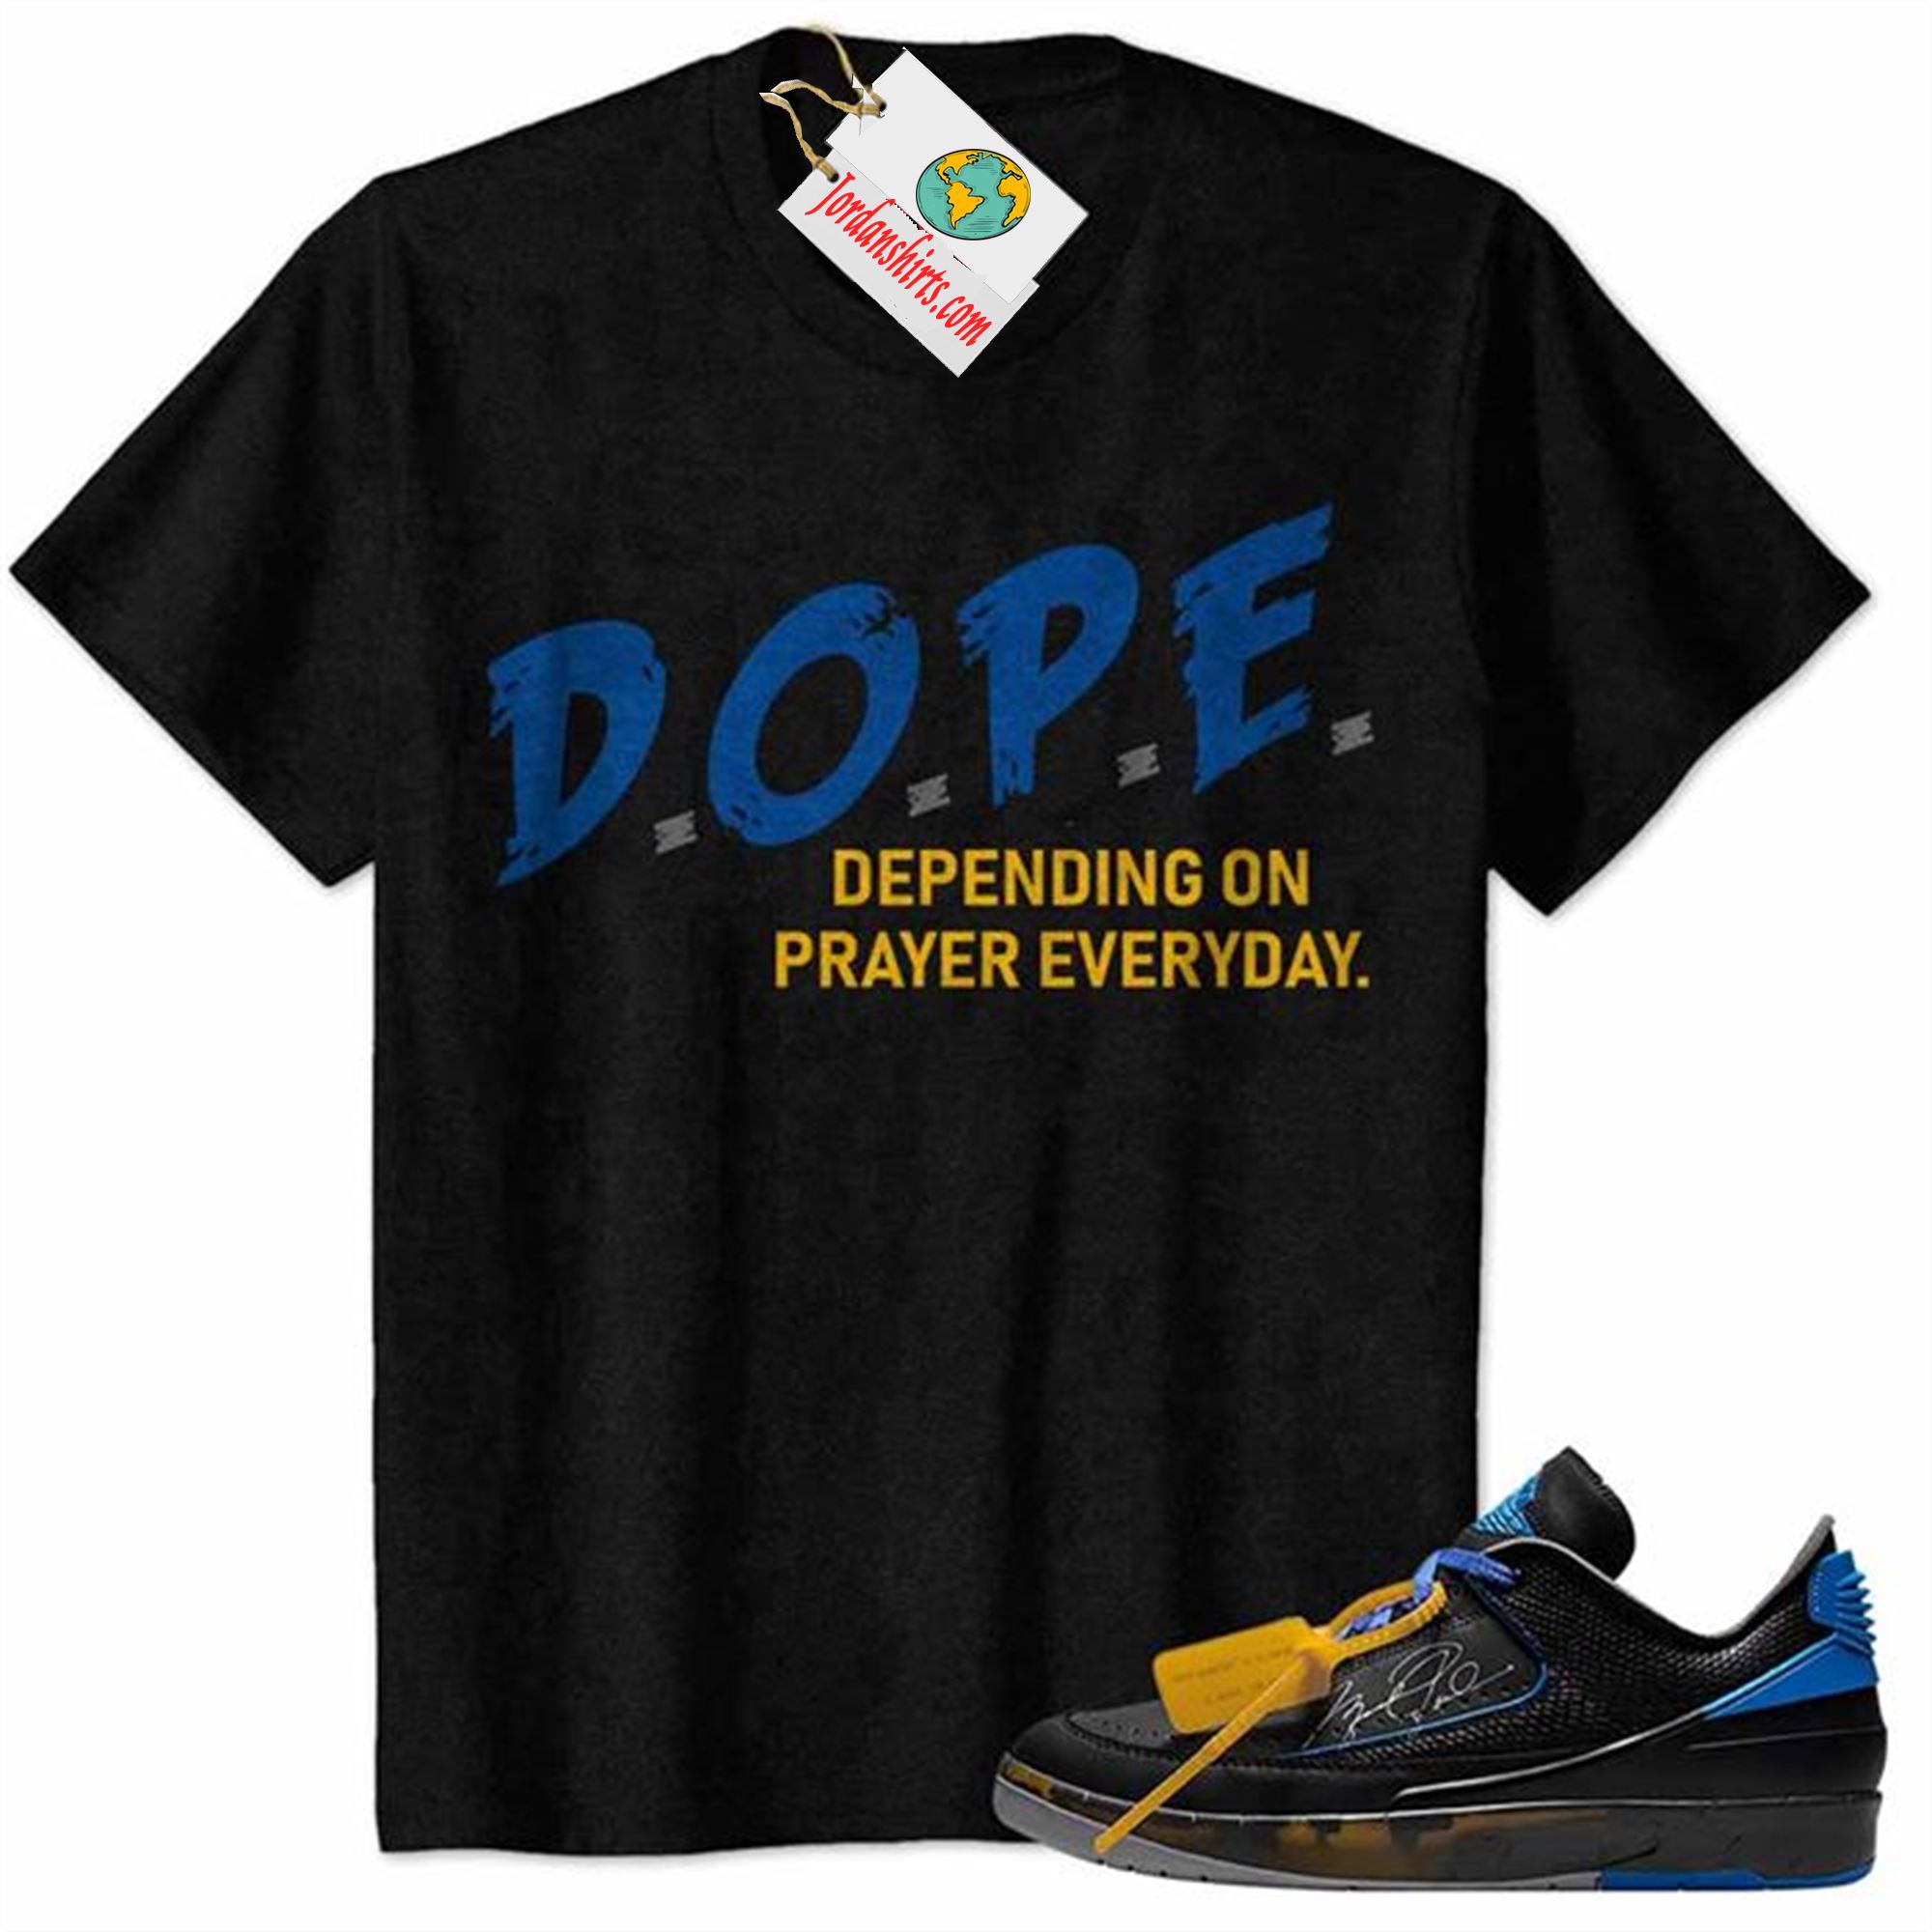 Jordan 2 Shirt, Dope Dope Depending On Prayer Everyday Black Air Jordan 2 Low X Off-white Black And Varsity Royal 2s Plus Size Up To 5xl